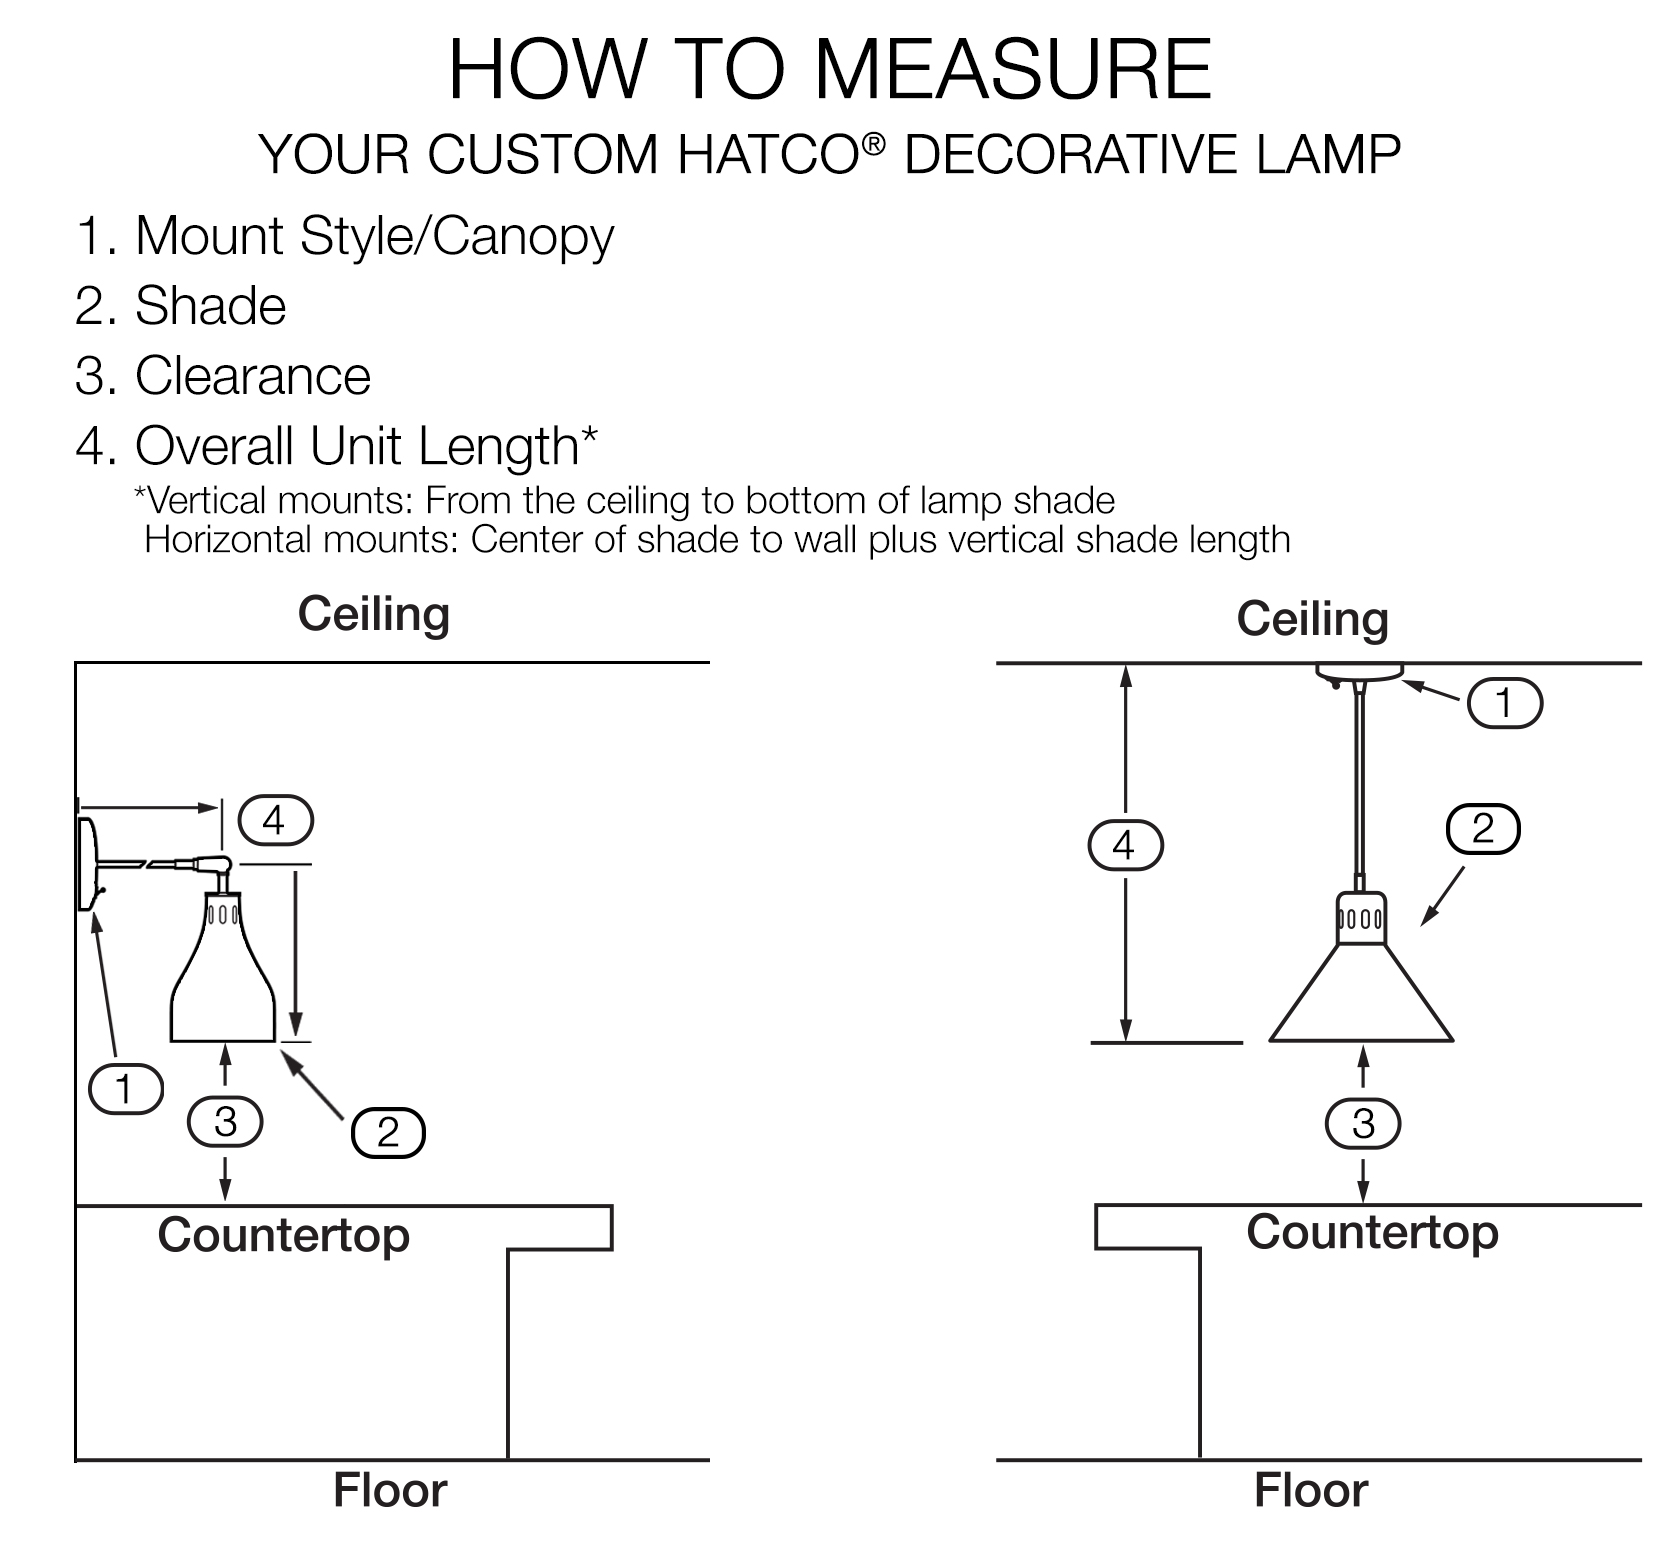 How to Order the Correct Hatco Lamp  Hatco Wiring Diagram    Hatco Corporation